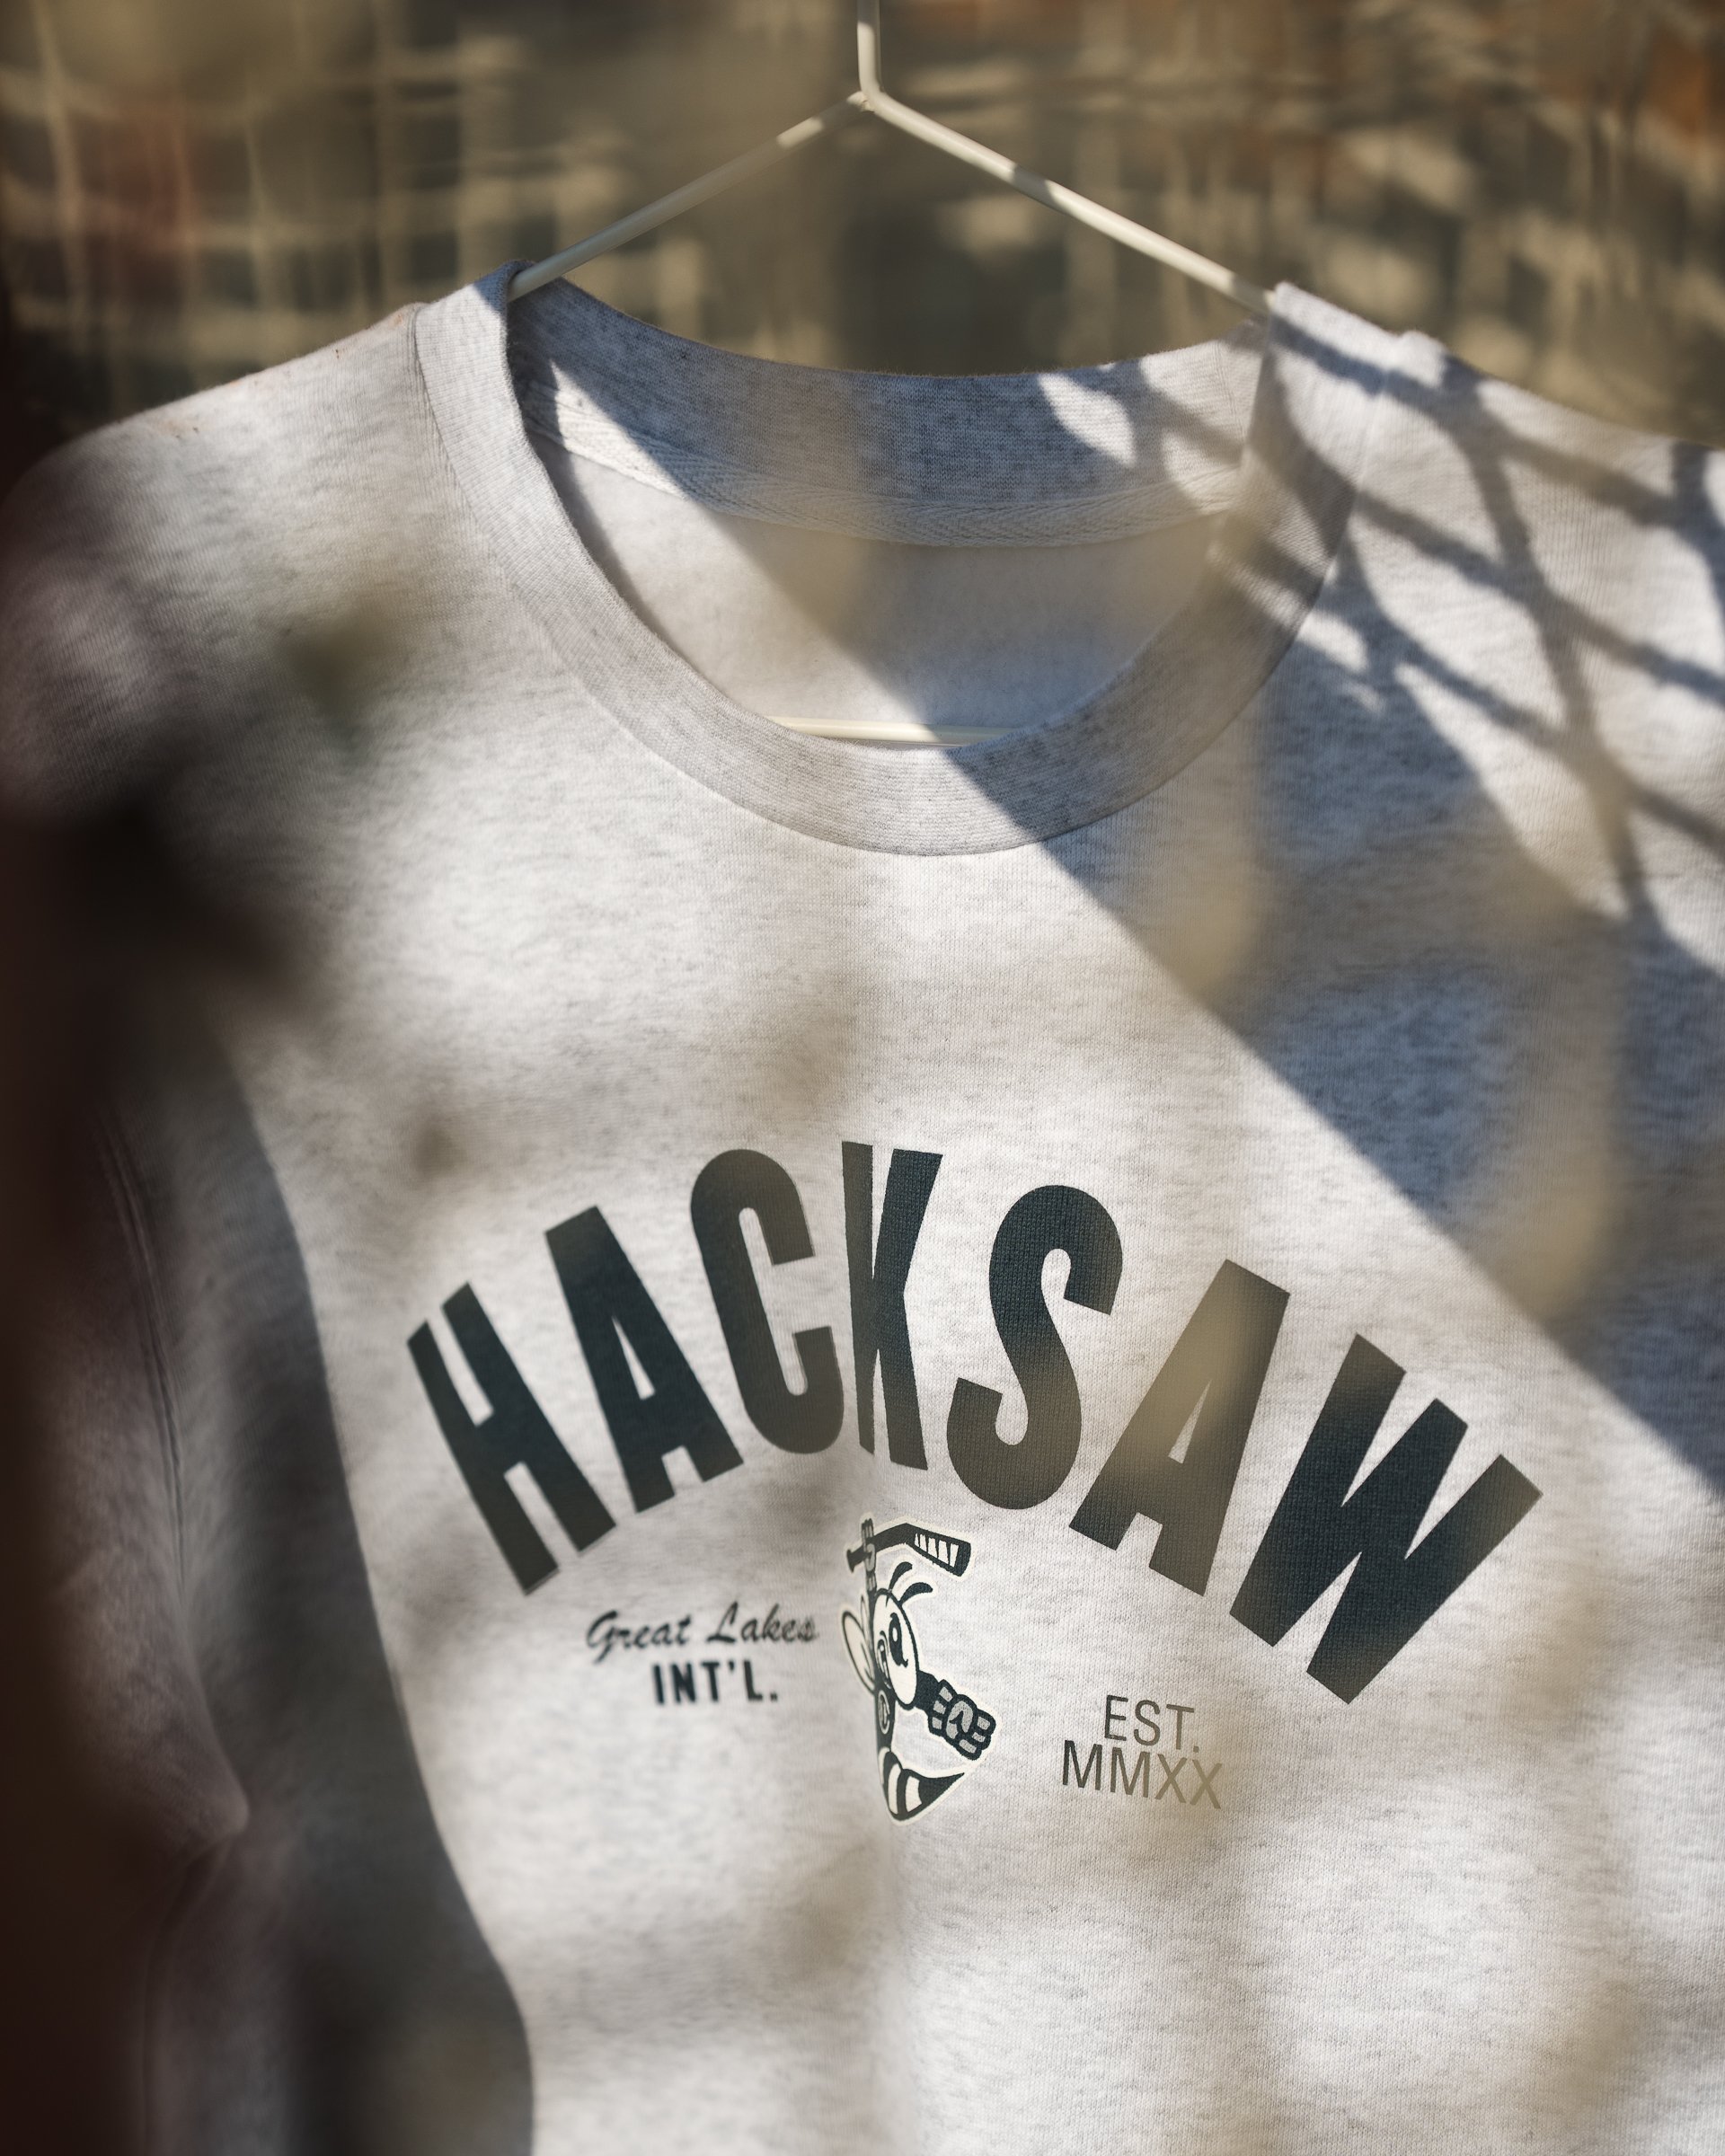 Hacksaw - product (06).jpg